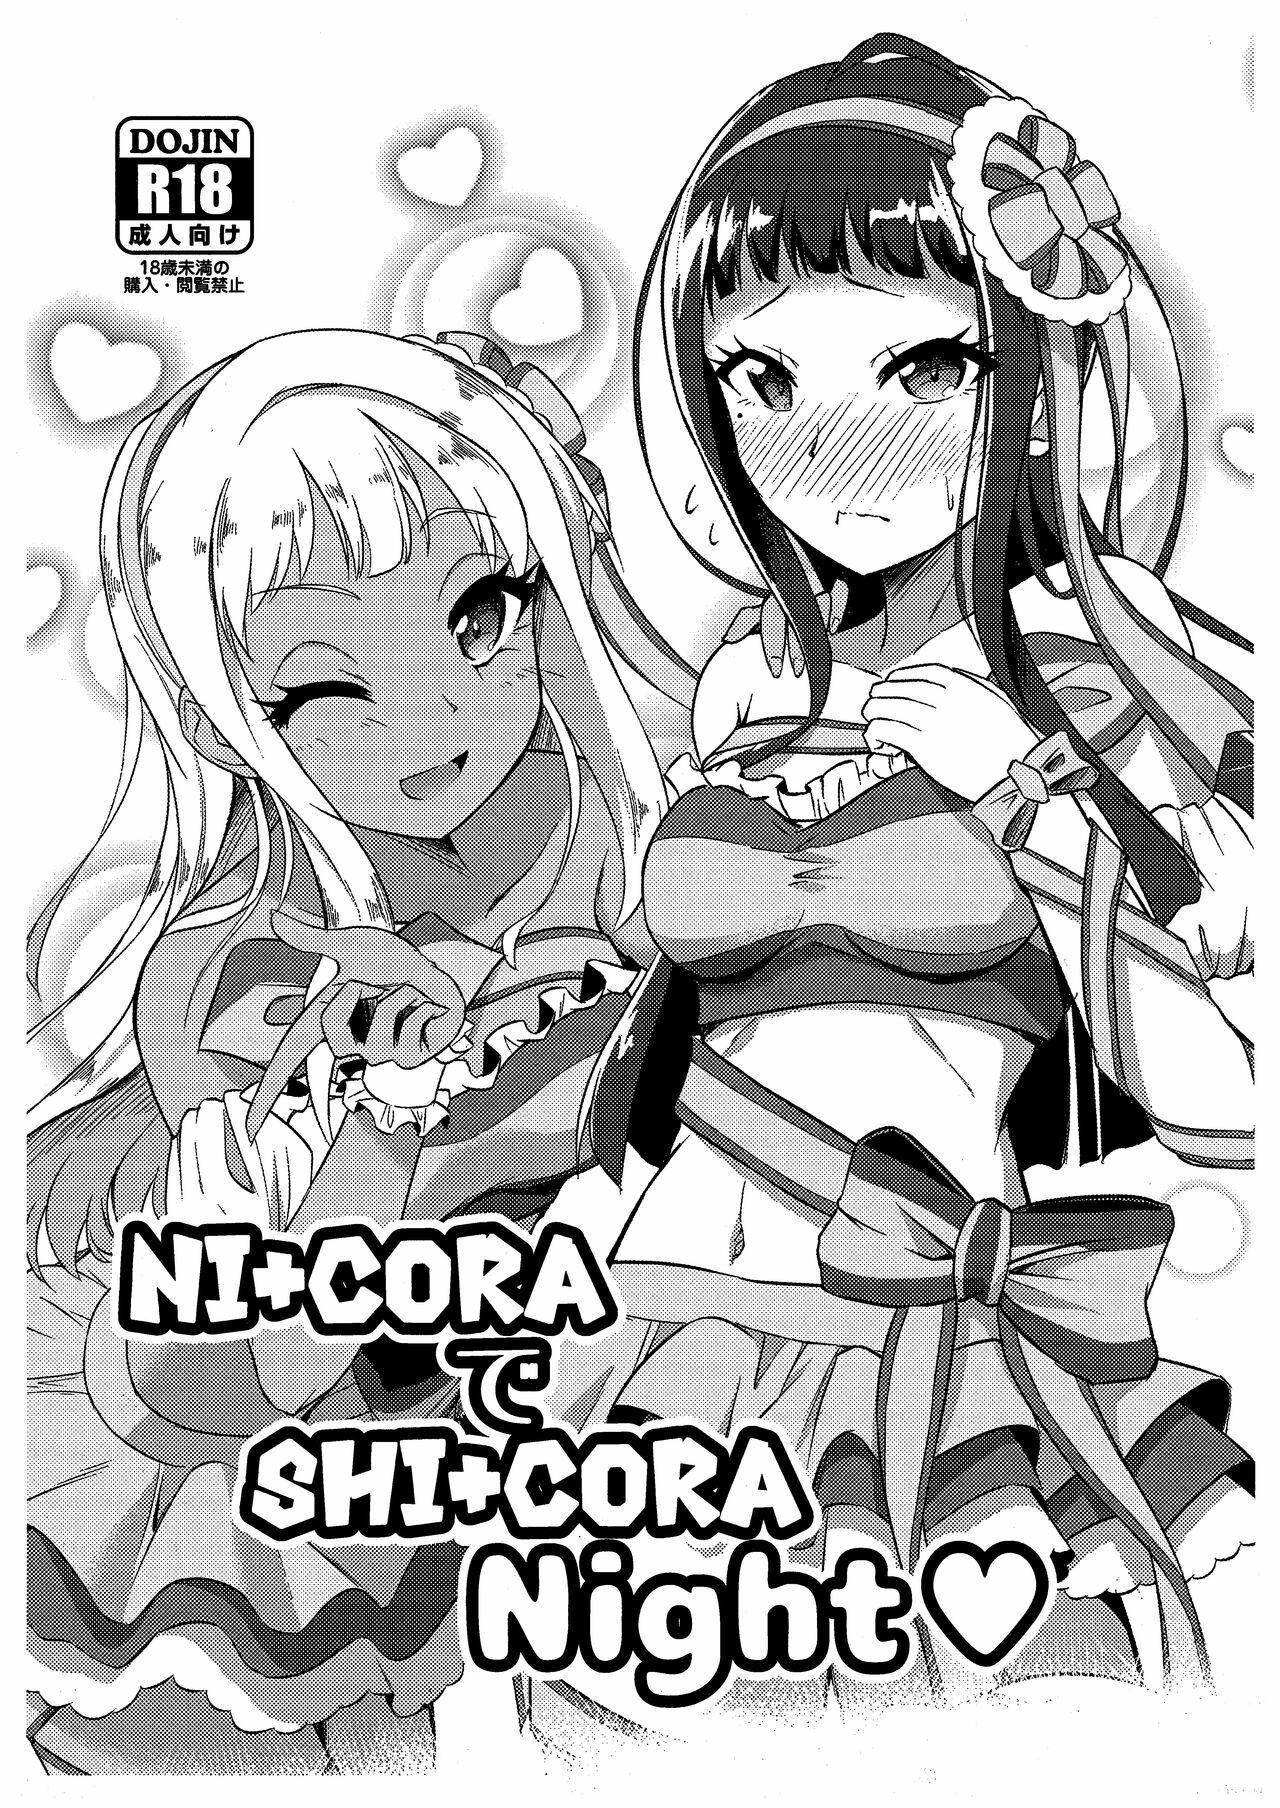 Hardcore Gay NI+CORA de SHI+CORA Night - Tokyo 7th sisters Shecock - Picture 1